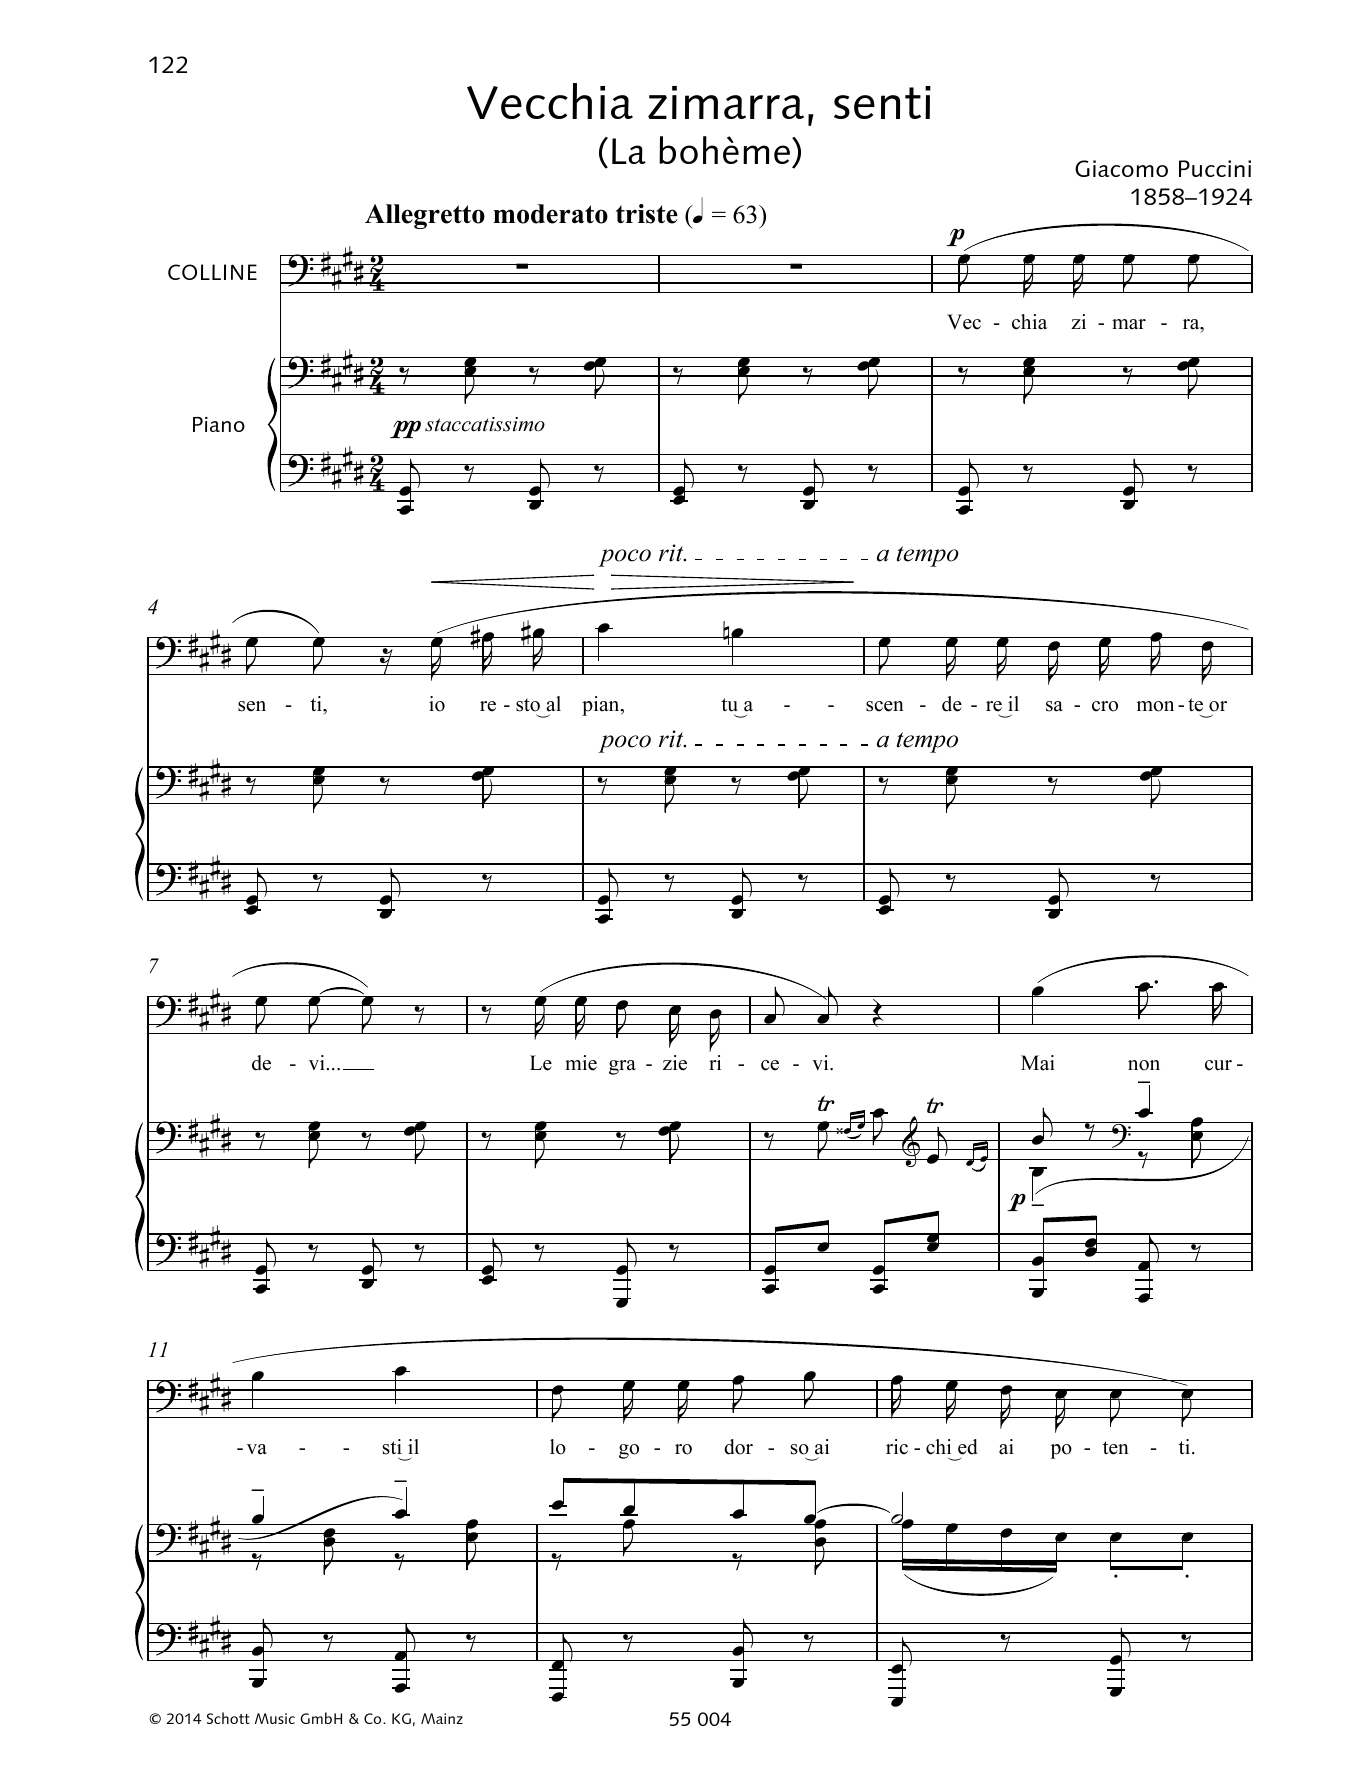 Giacomo Puccini Vecchia zimarra, senti Sheet Music Notes & Chords for Piano & Vocal - Download or Print PDF